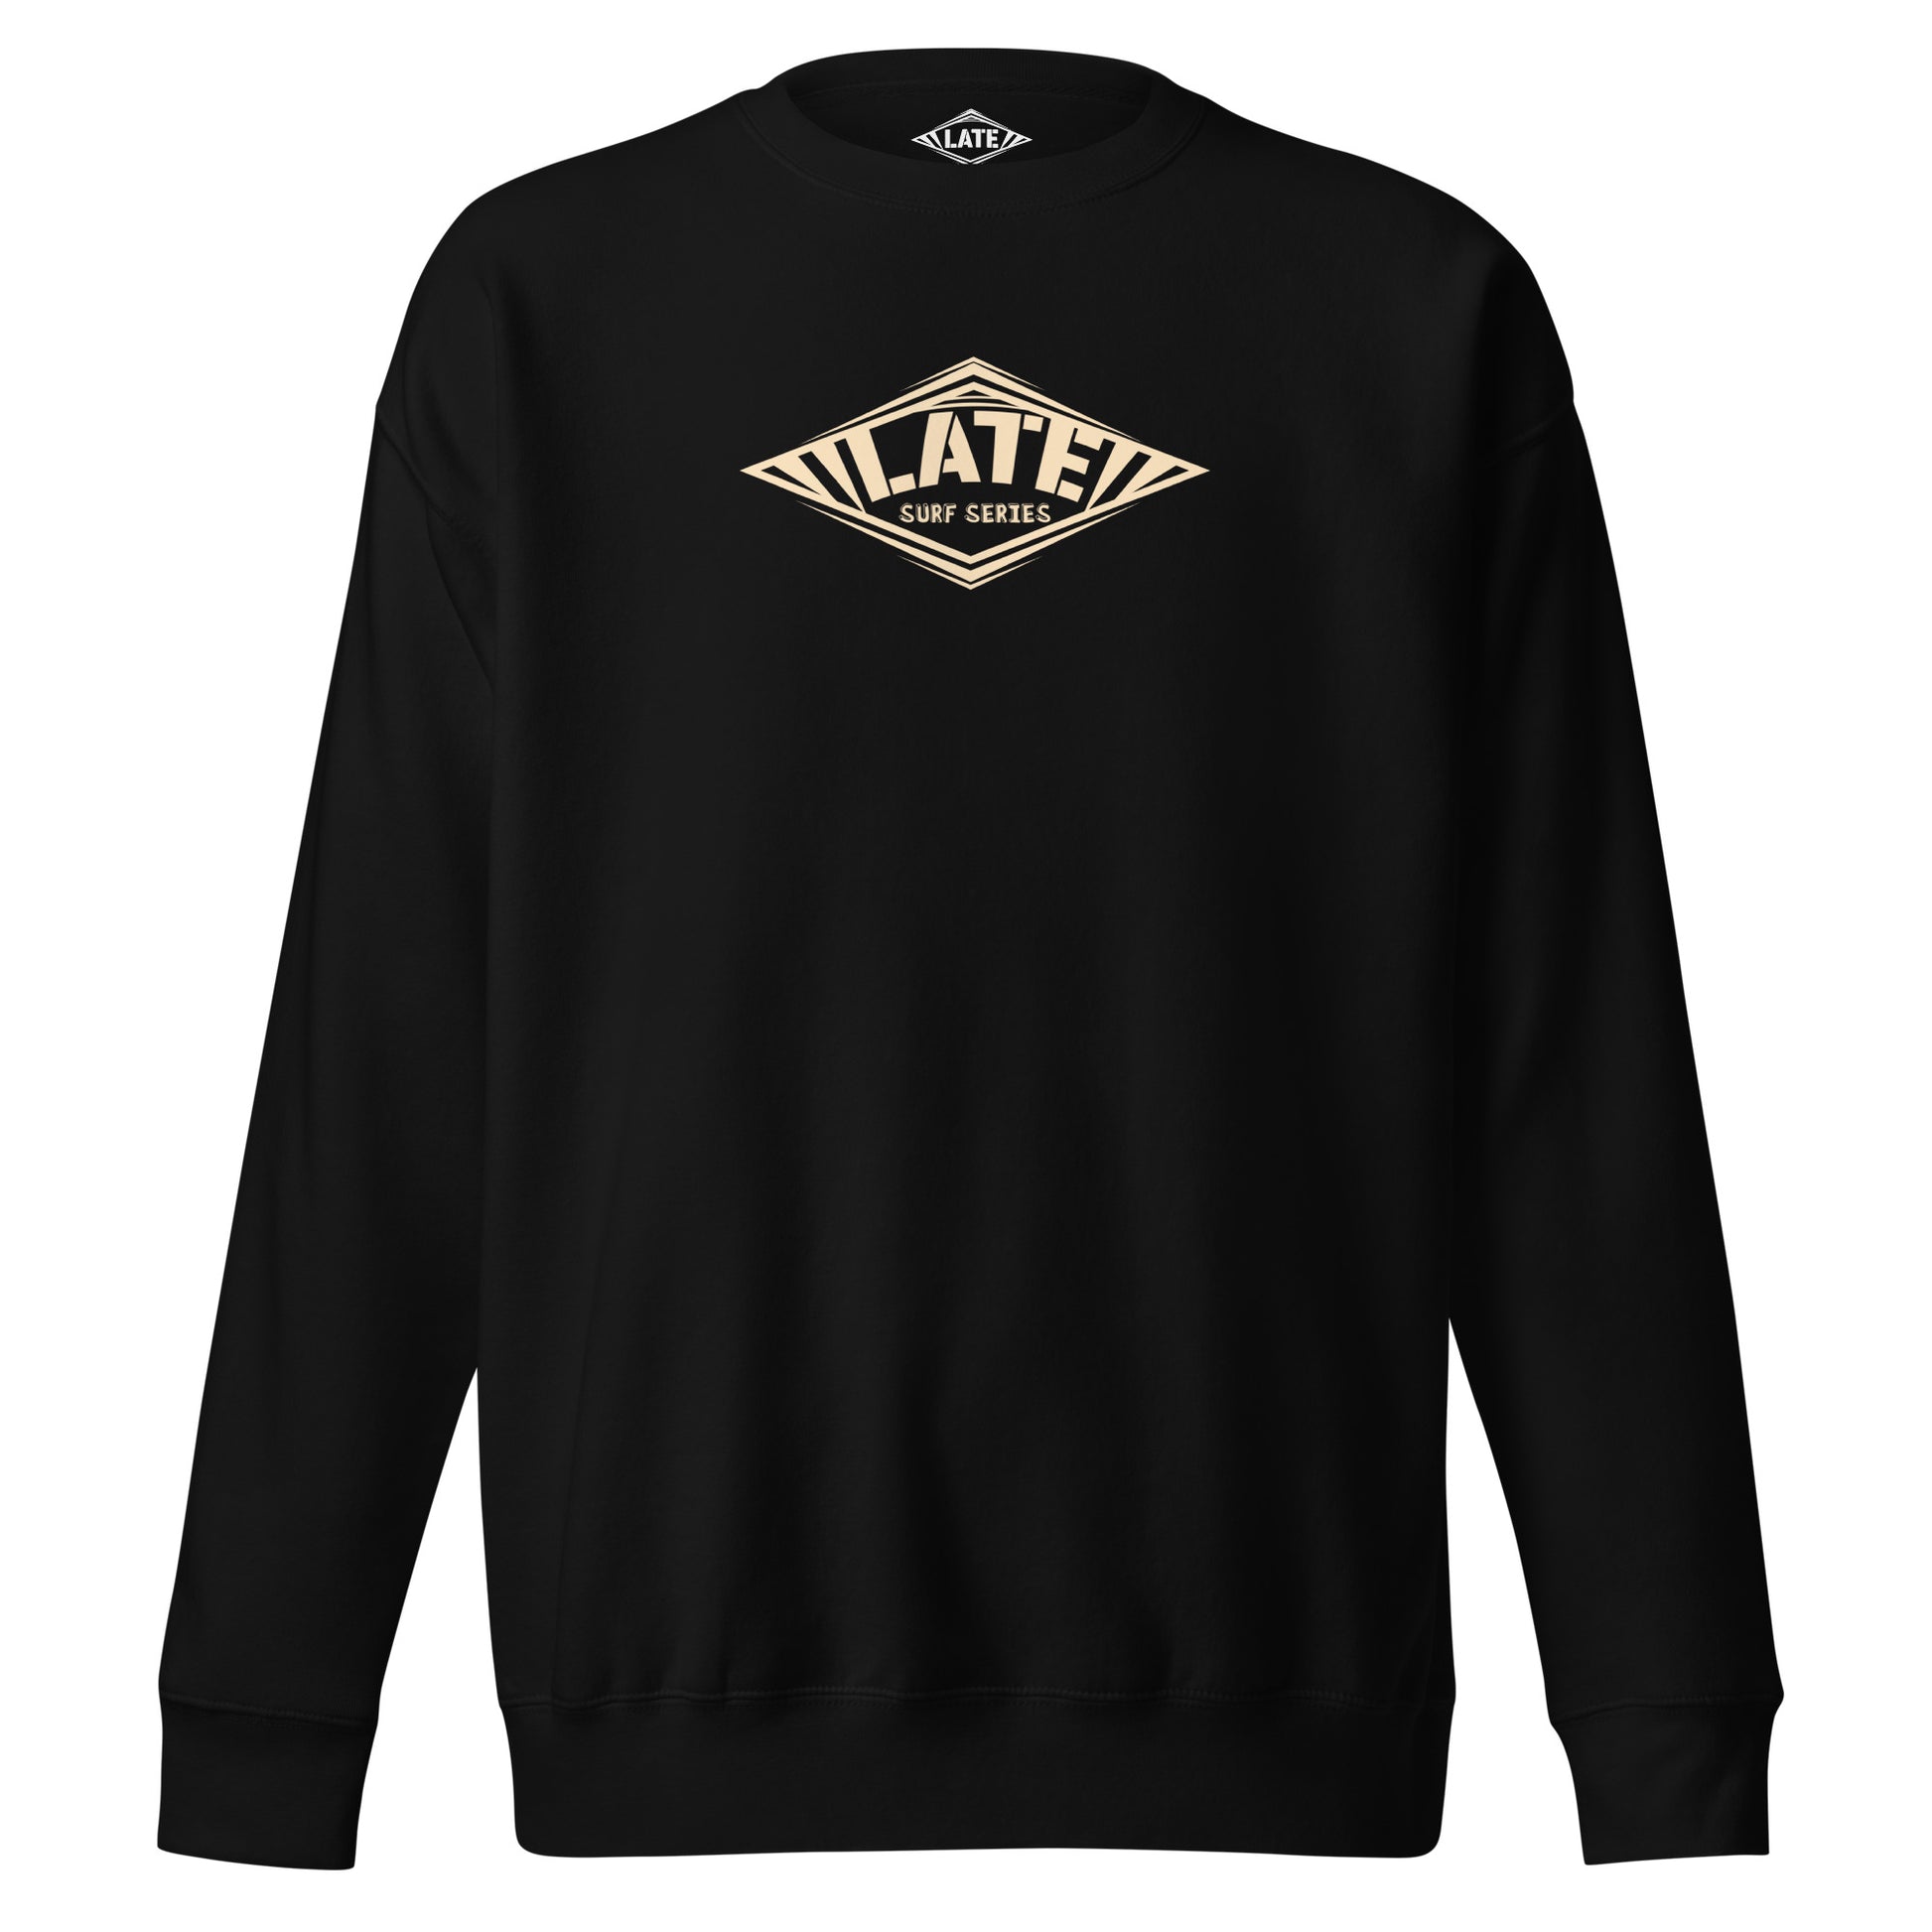 Sweatshirt Take On The Elements surf series logo Late sweat unisex noir